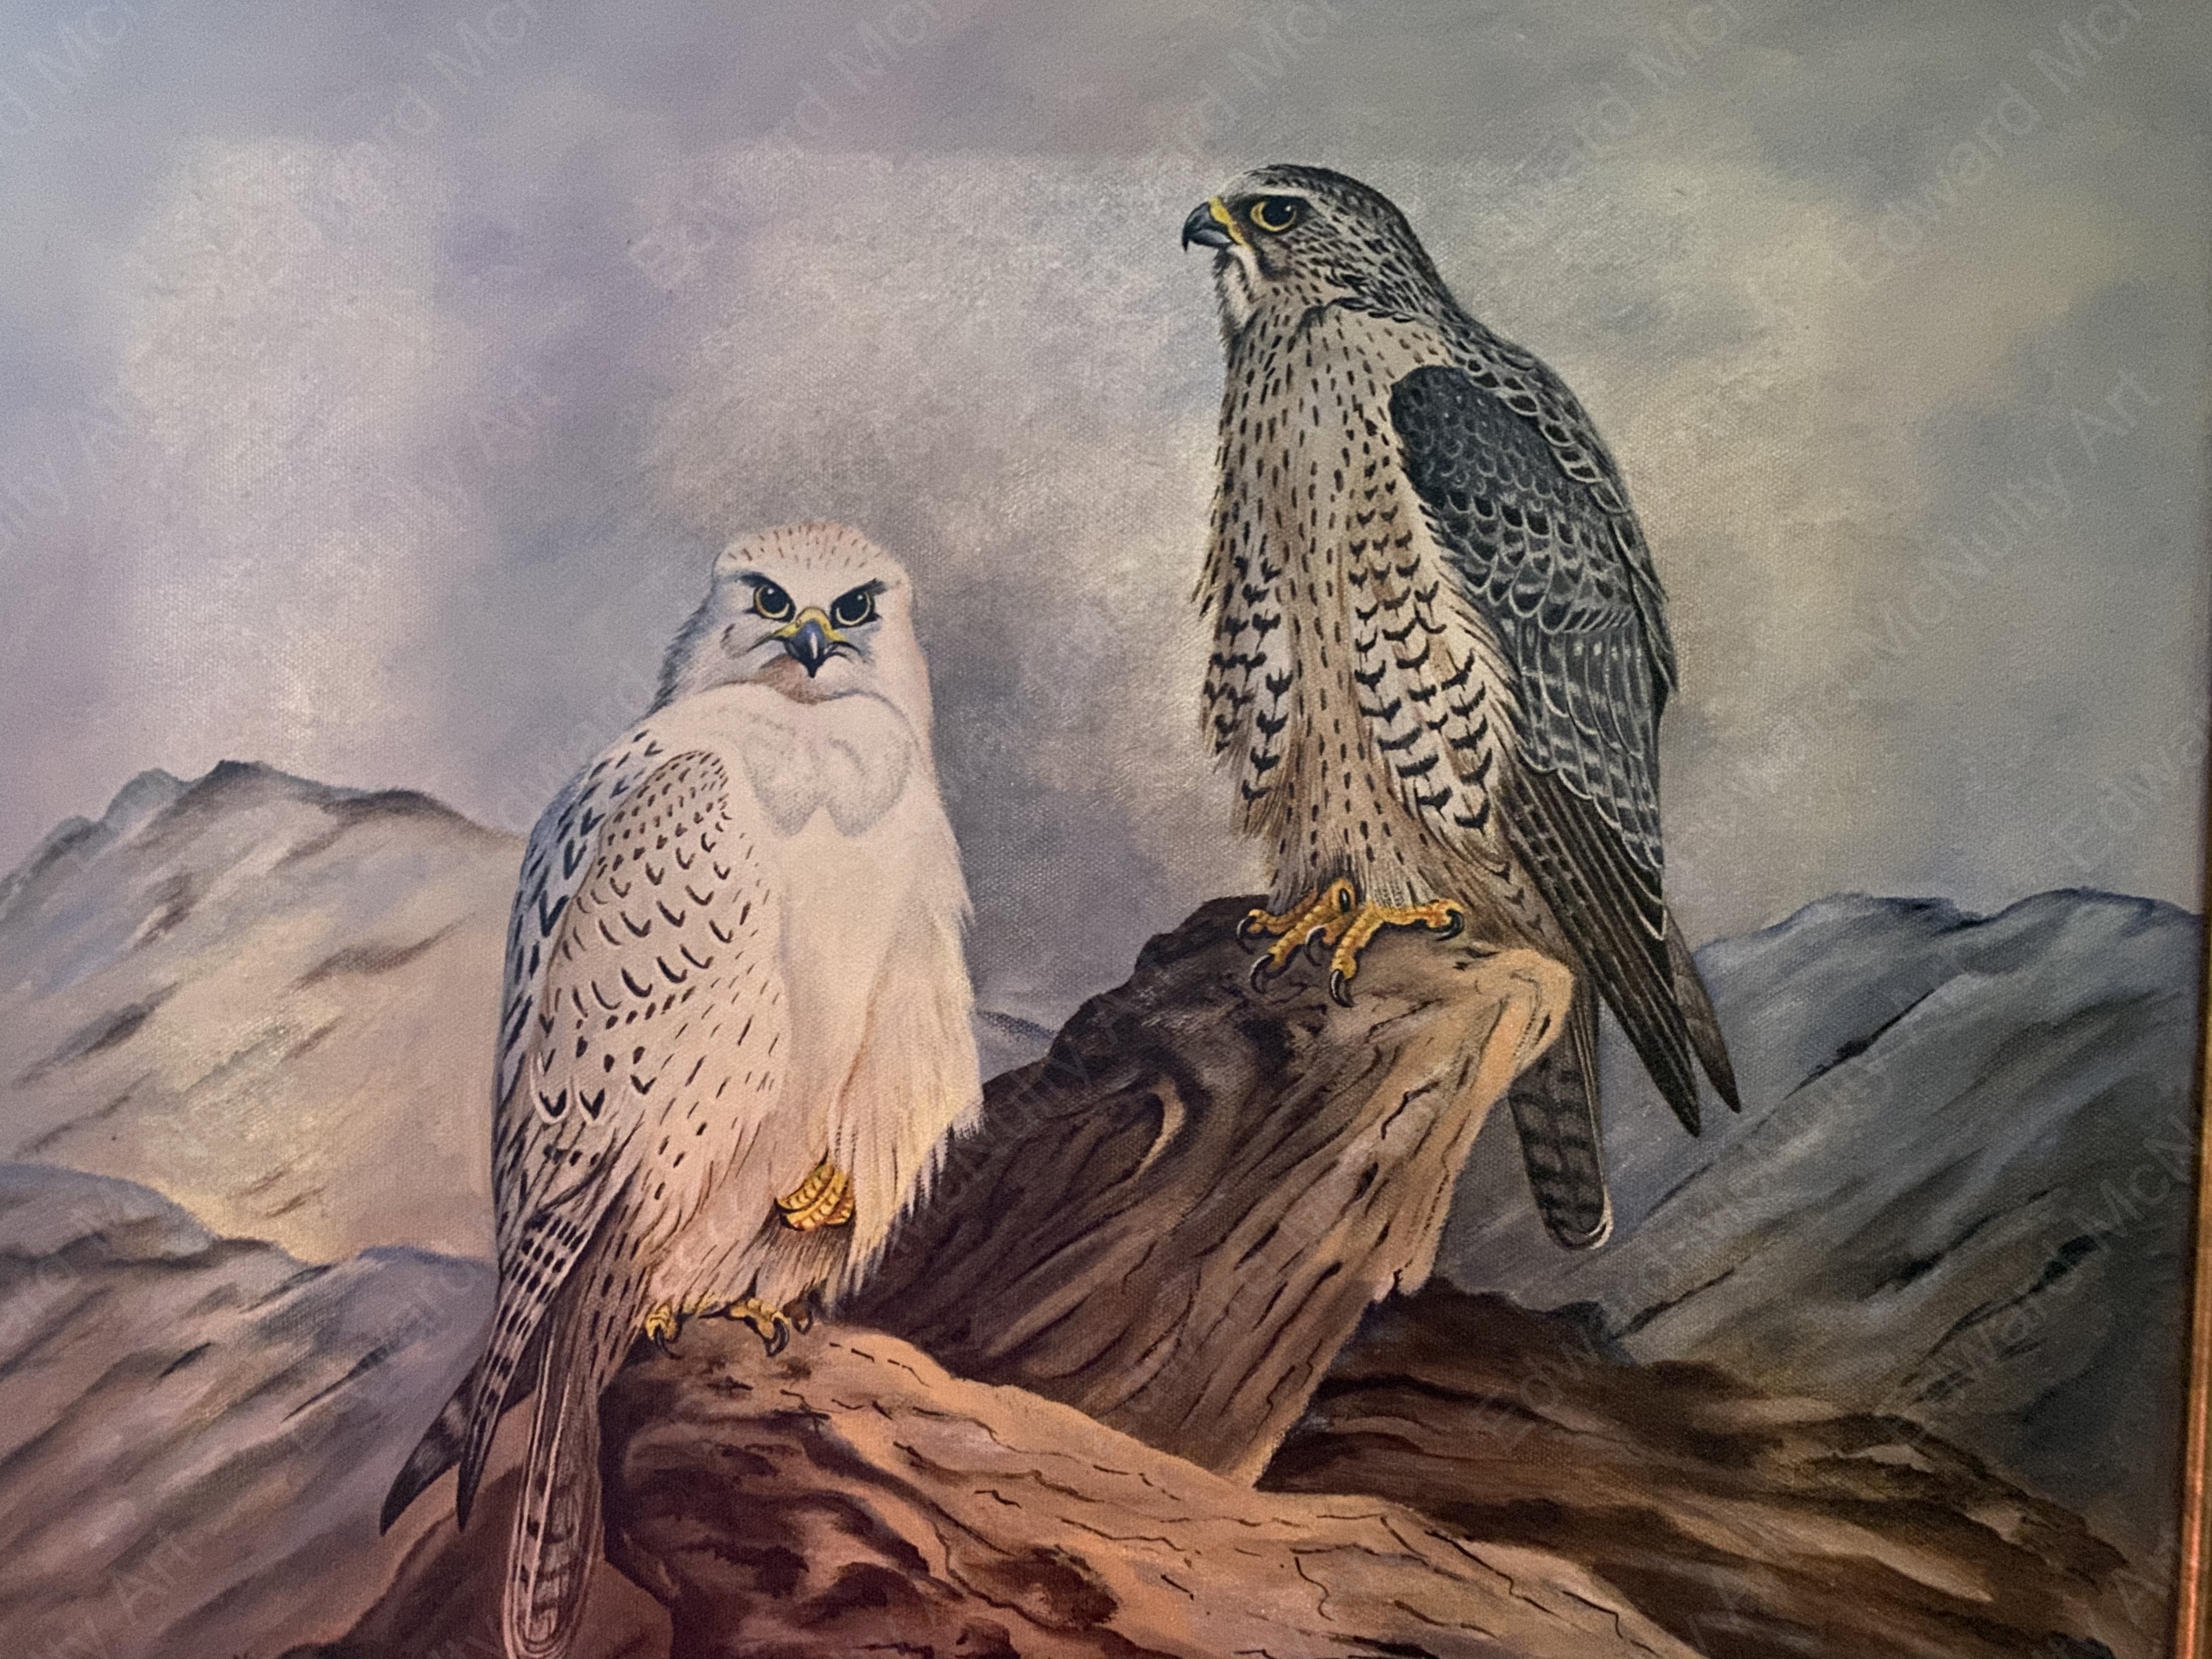 'Birds of Prey' a pair of Falcons